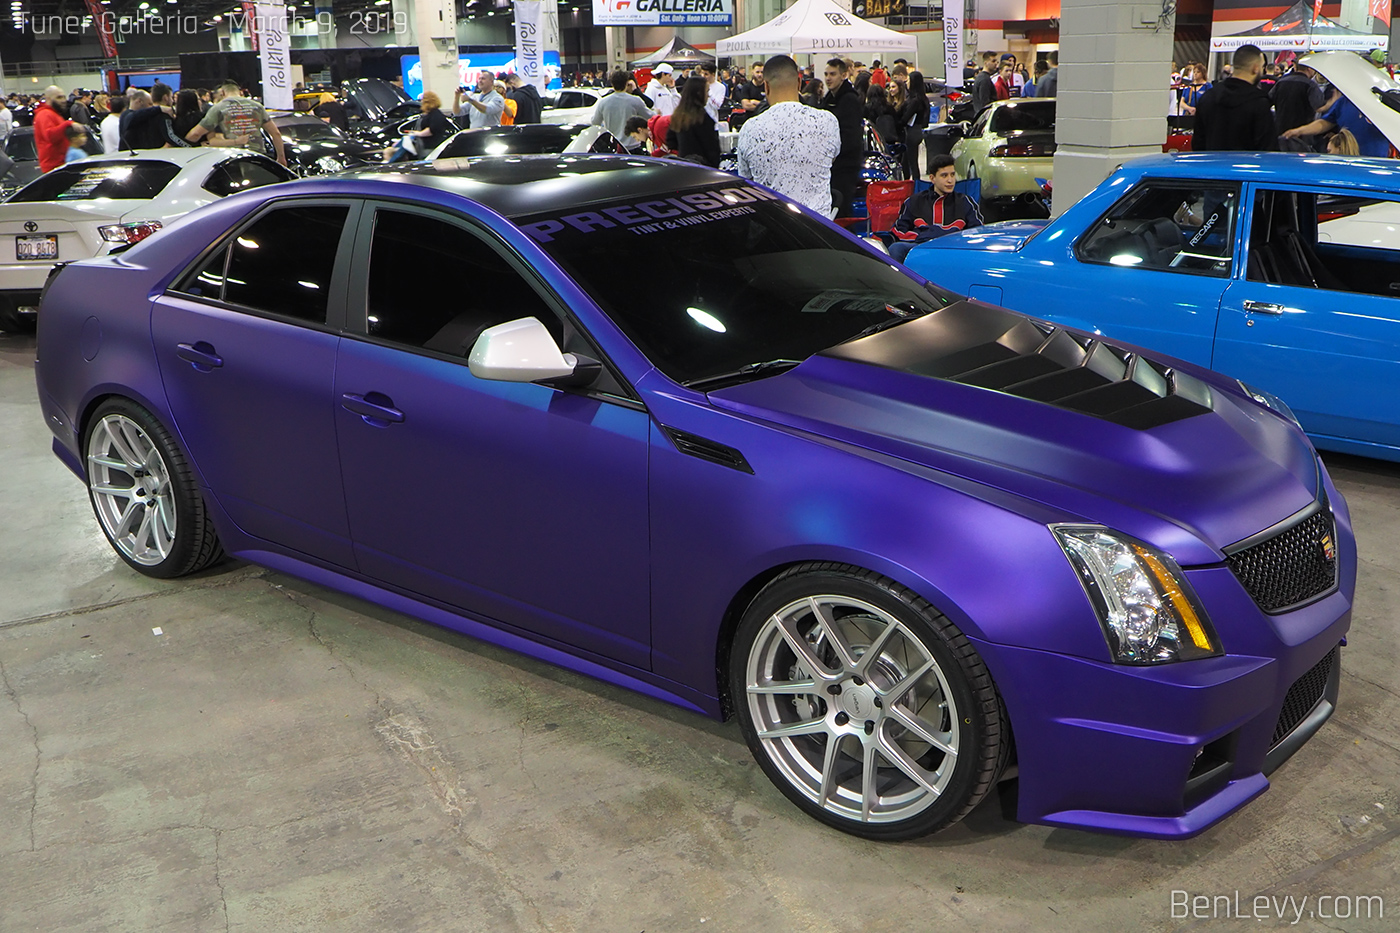 Cadillac CTS Sedan with Satin Purple Wrap